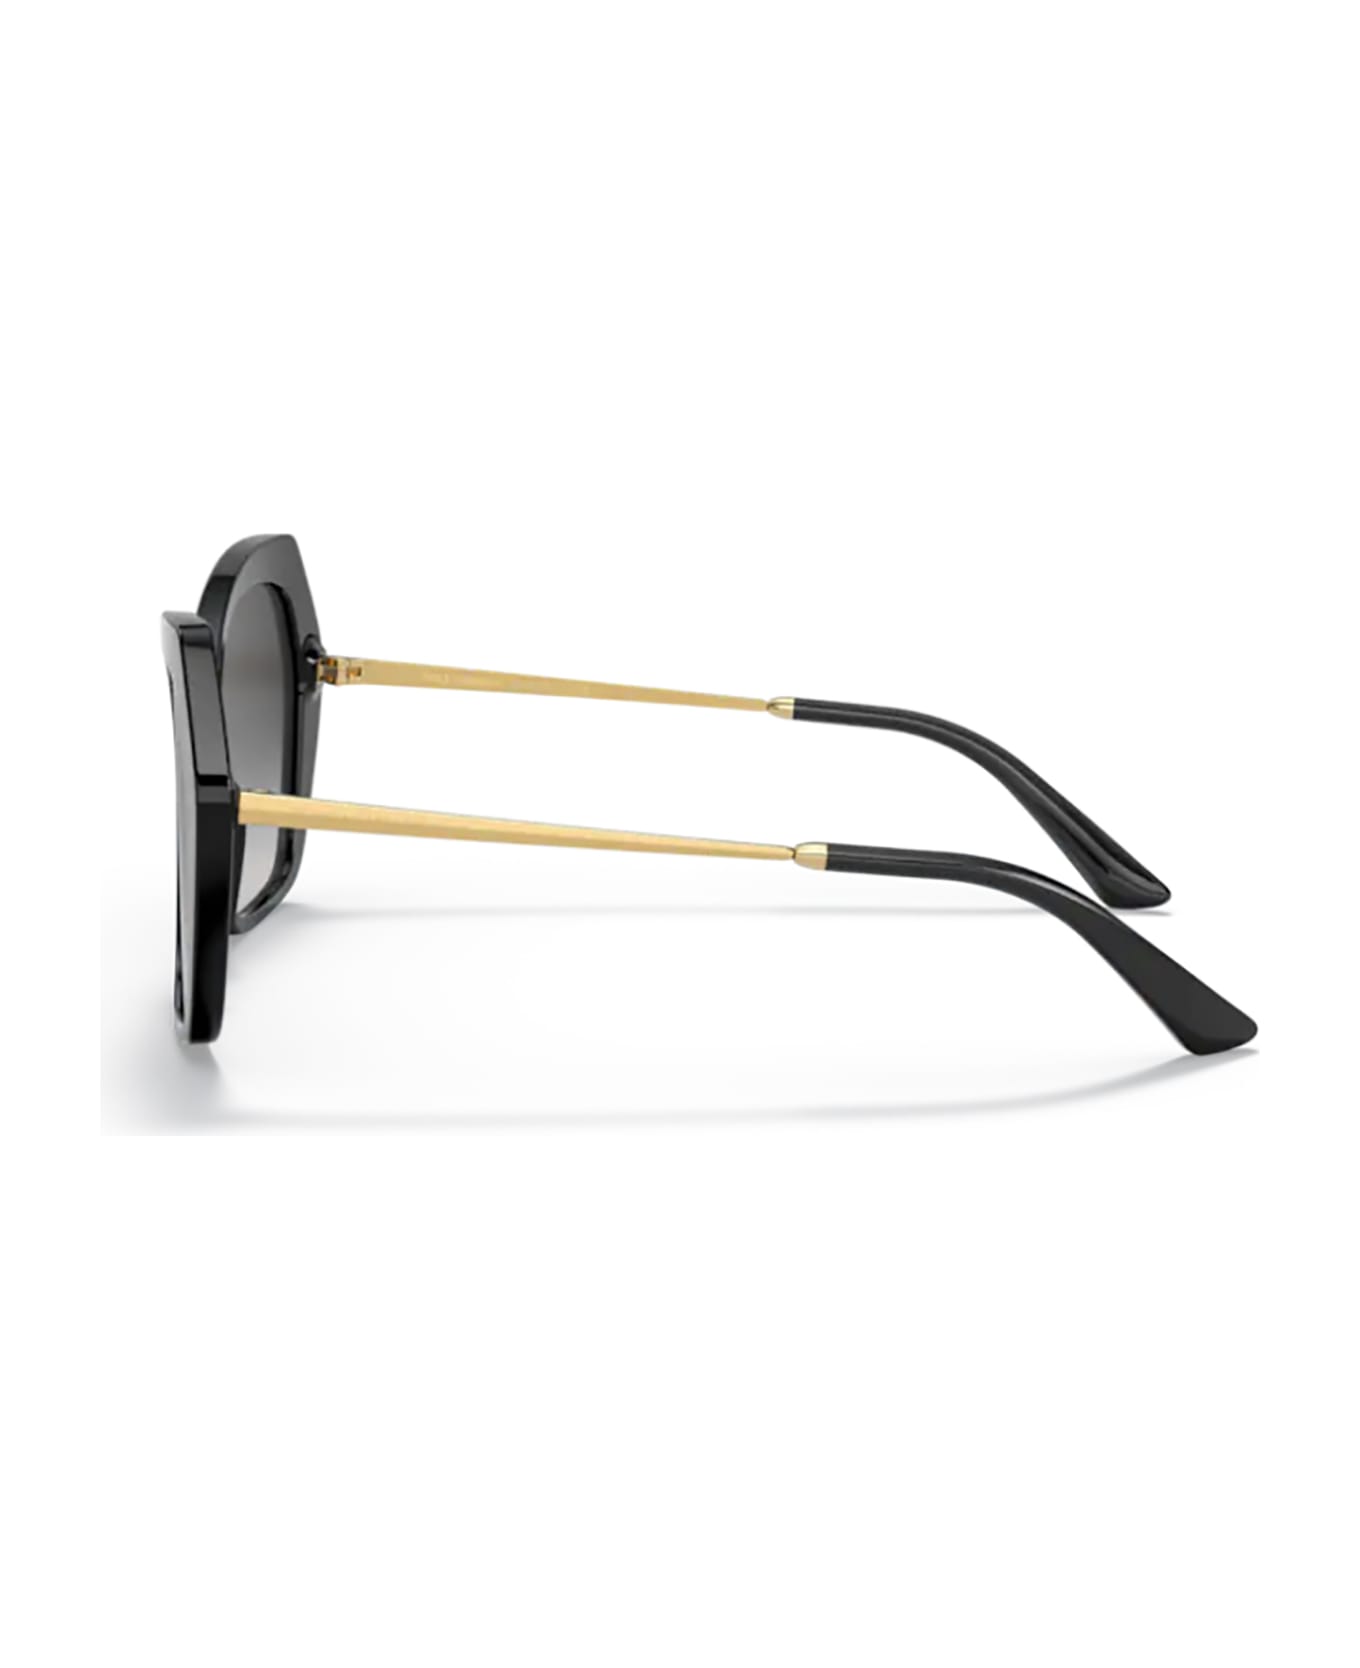 Dolce & Gabbana Eyewear 0DG4399 Sunglasses - G